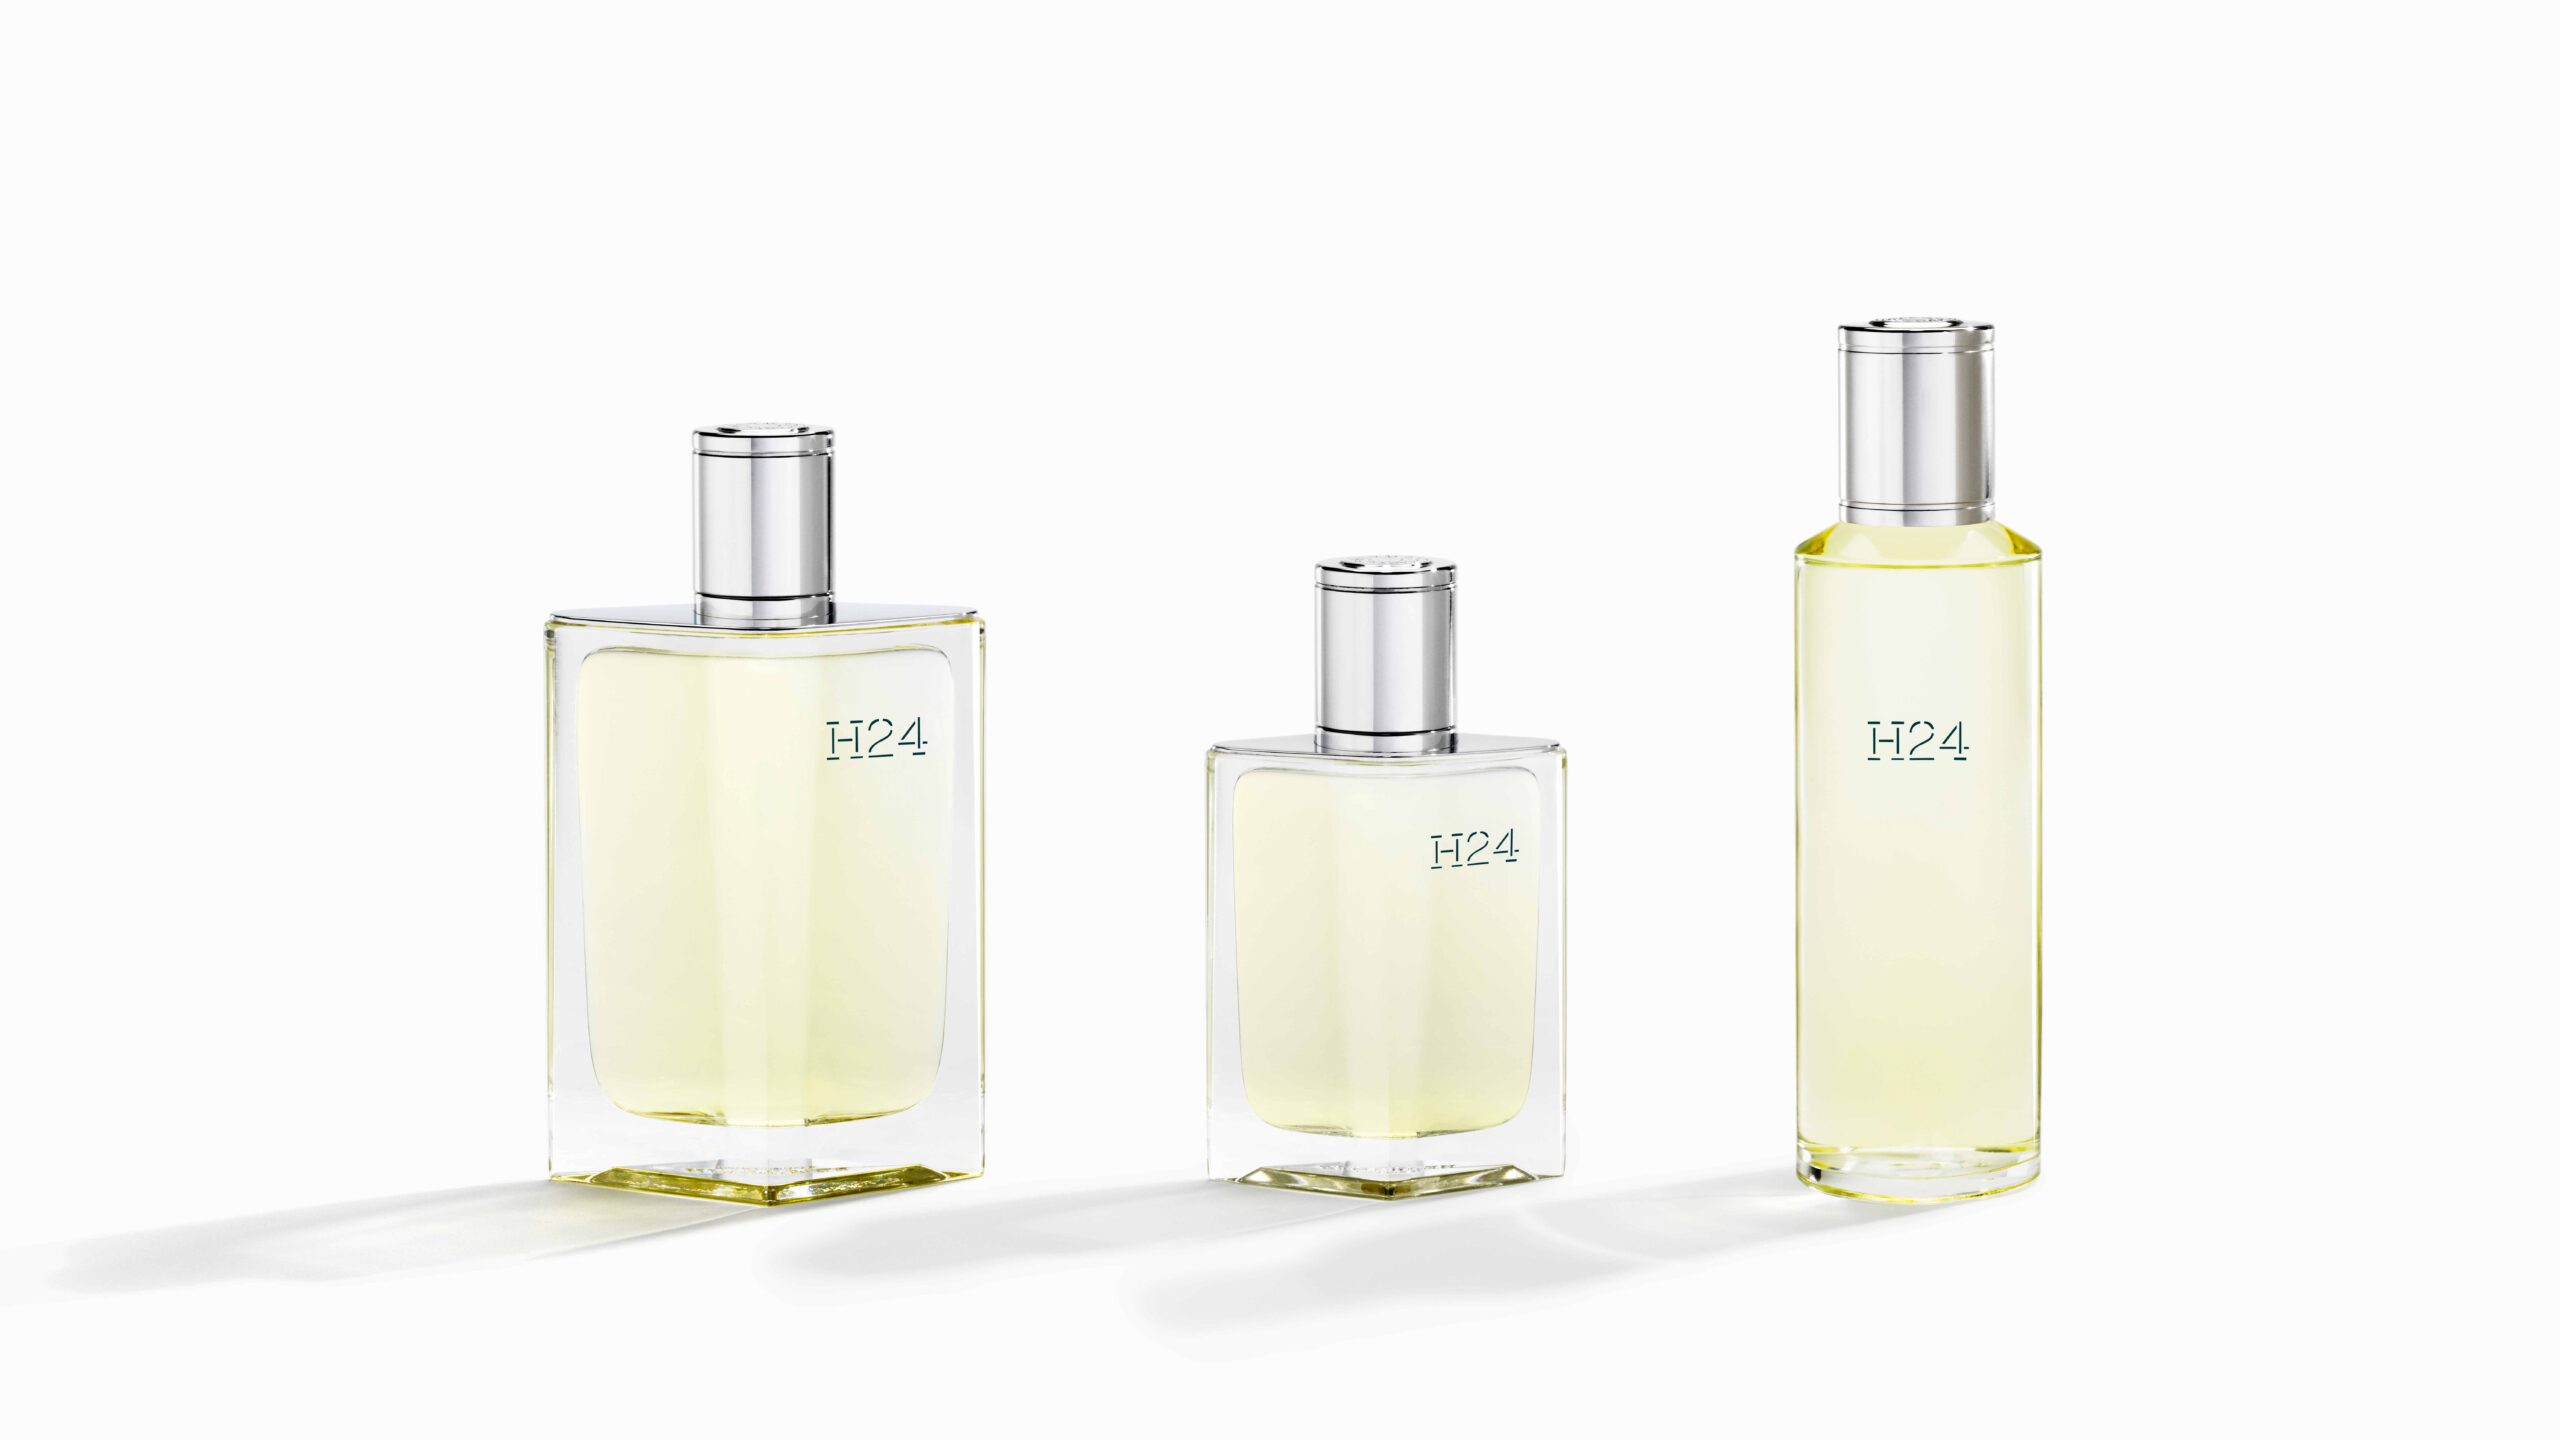 H24, un perfume masculino que mezcla naturaleza y tecnología